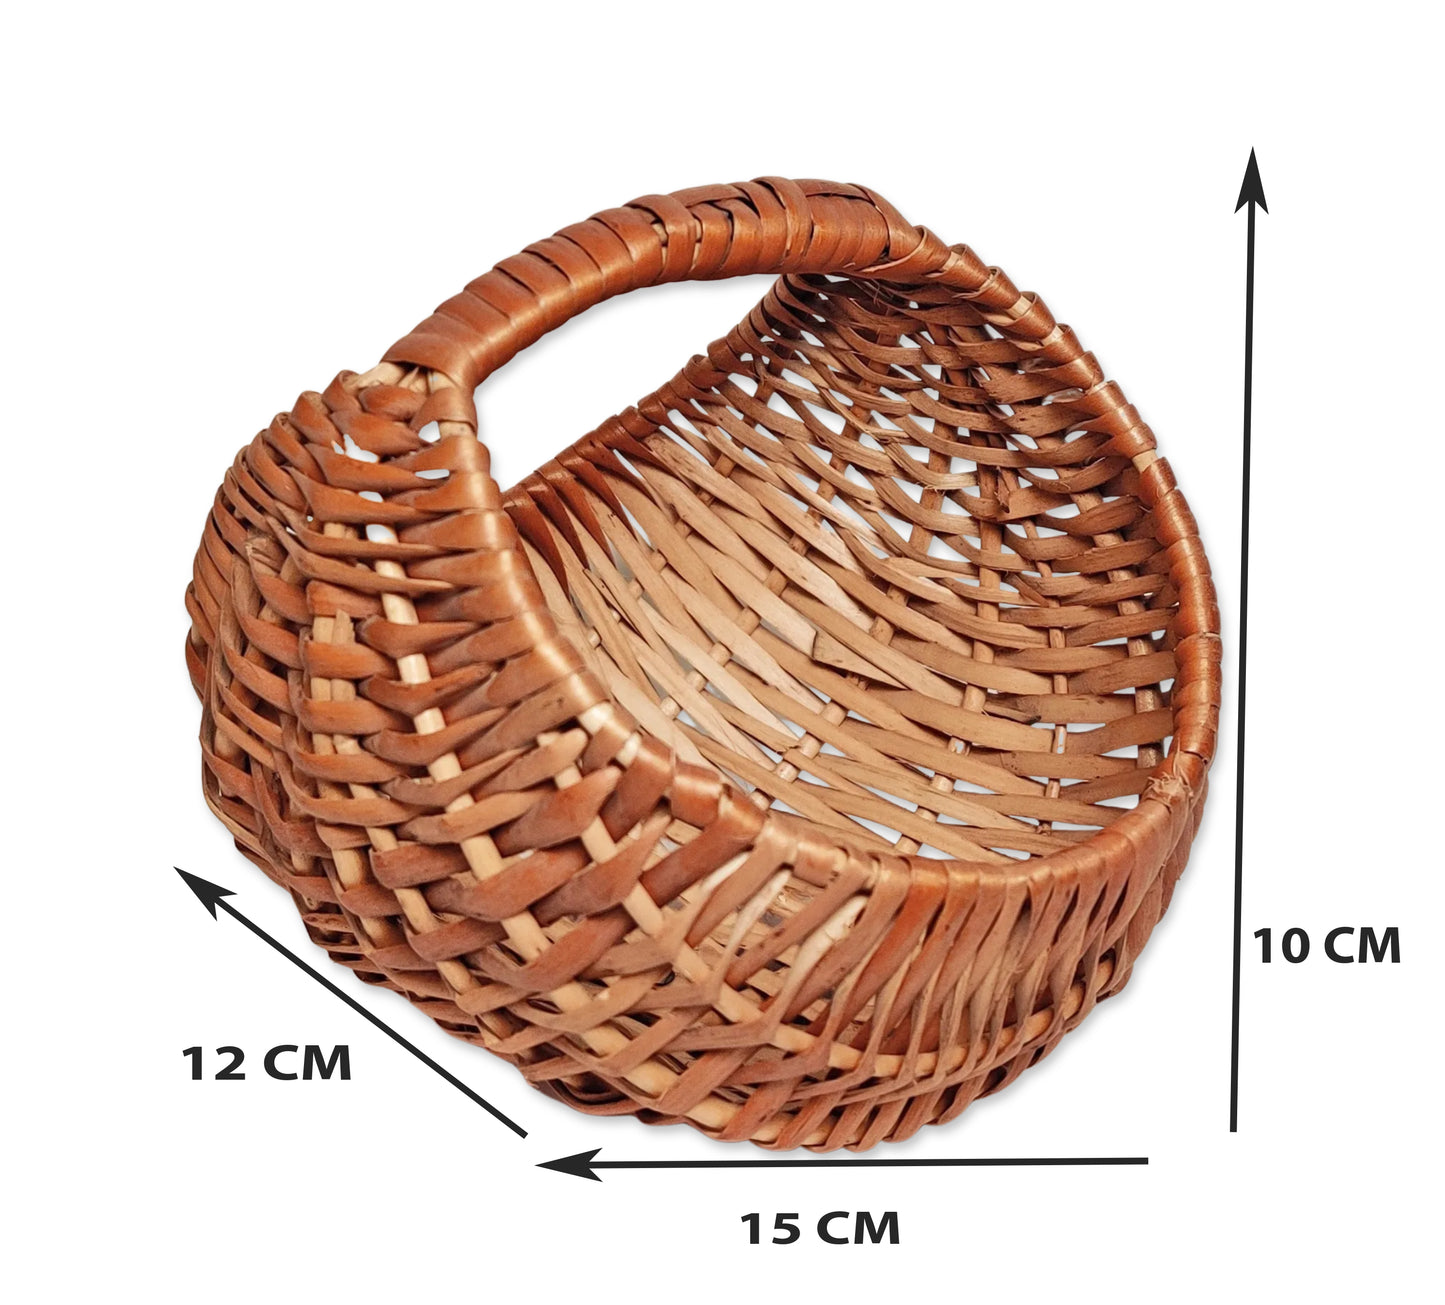 Cane Elegance: Multipurpose Basket for Stylish Storage, Organization, travel, gifting, packaging and many more | 10 X 15 X 12 CM